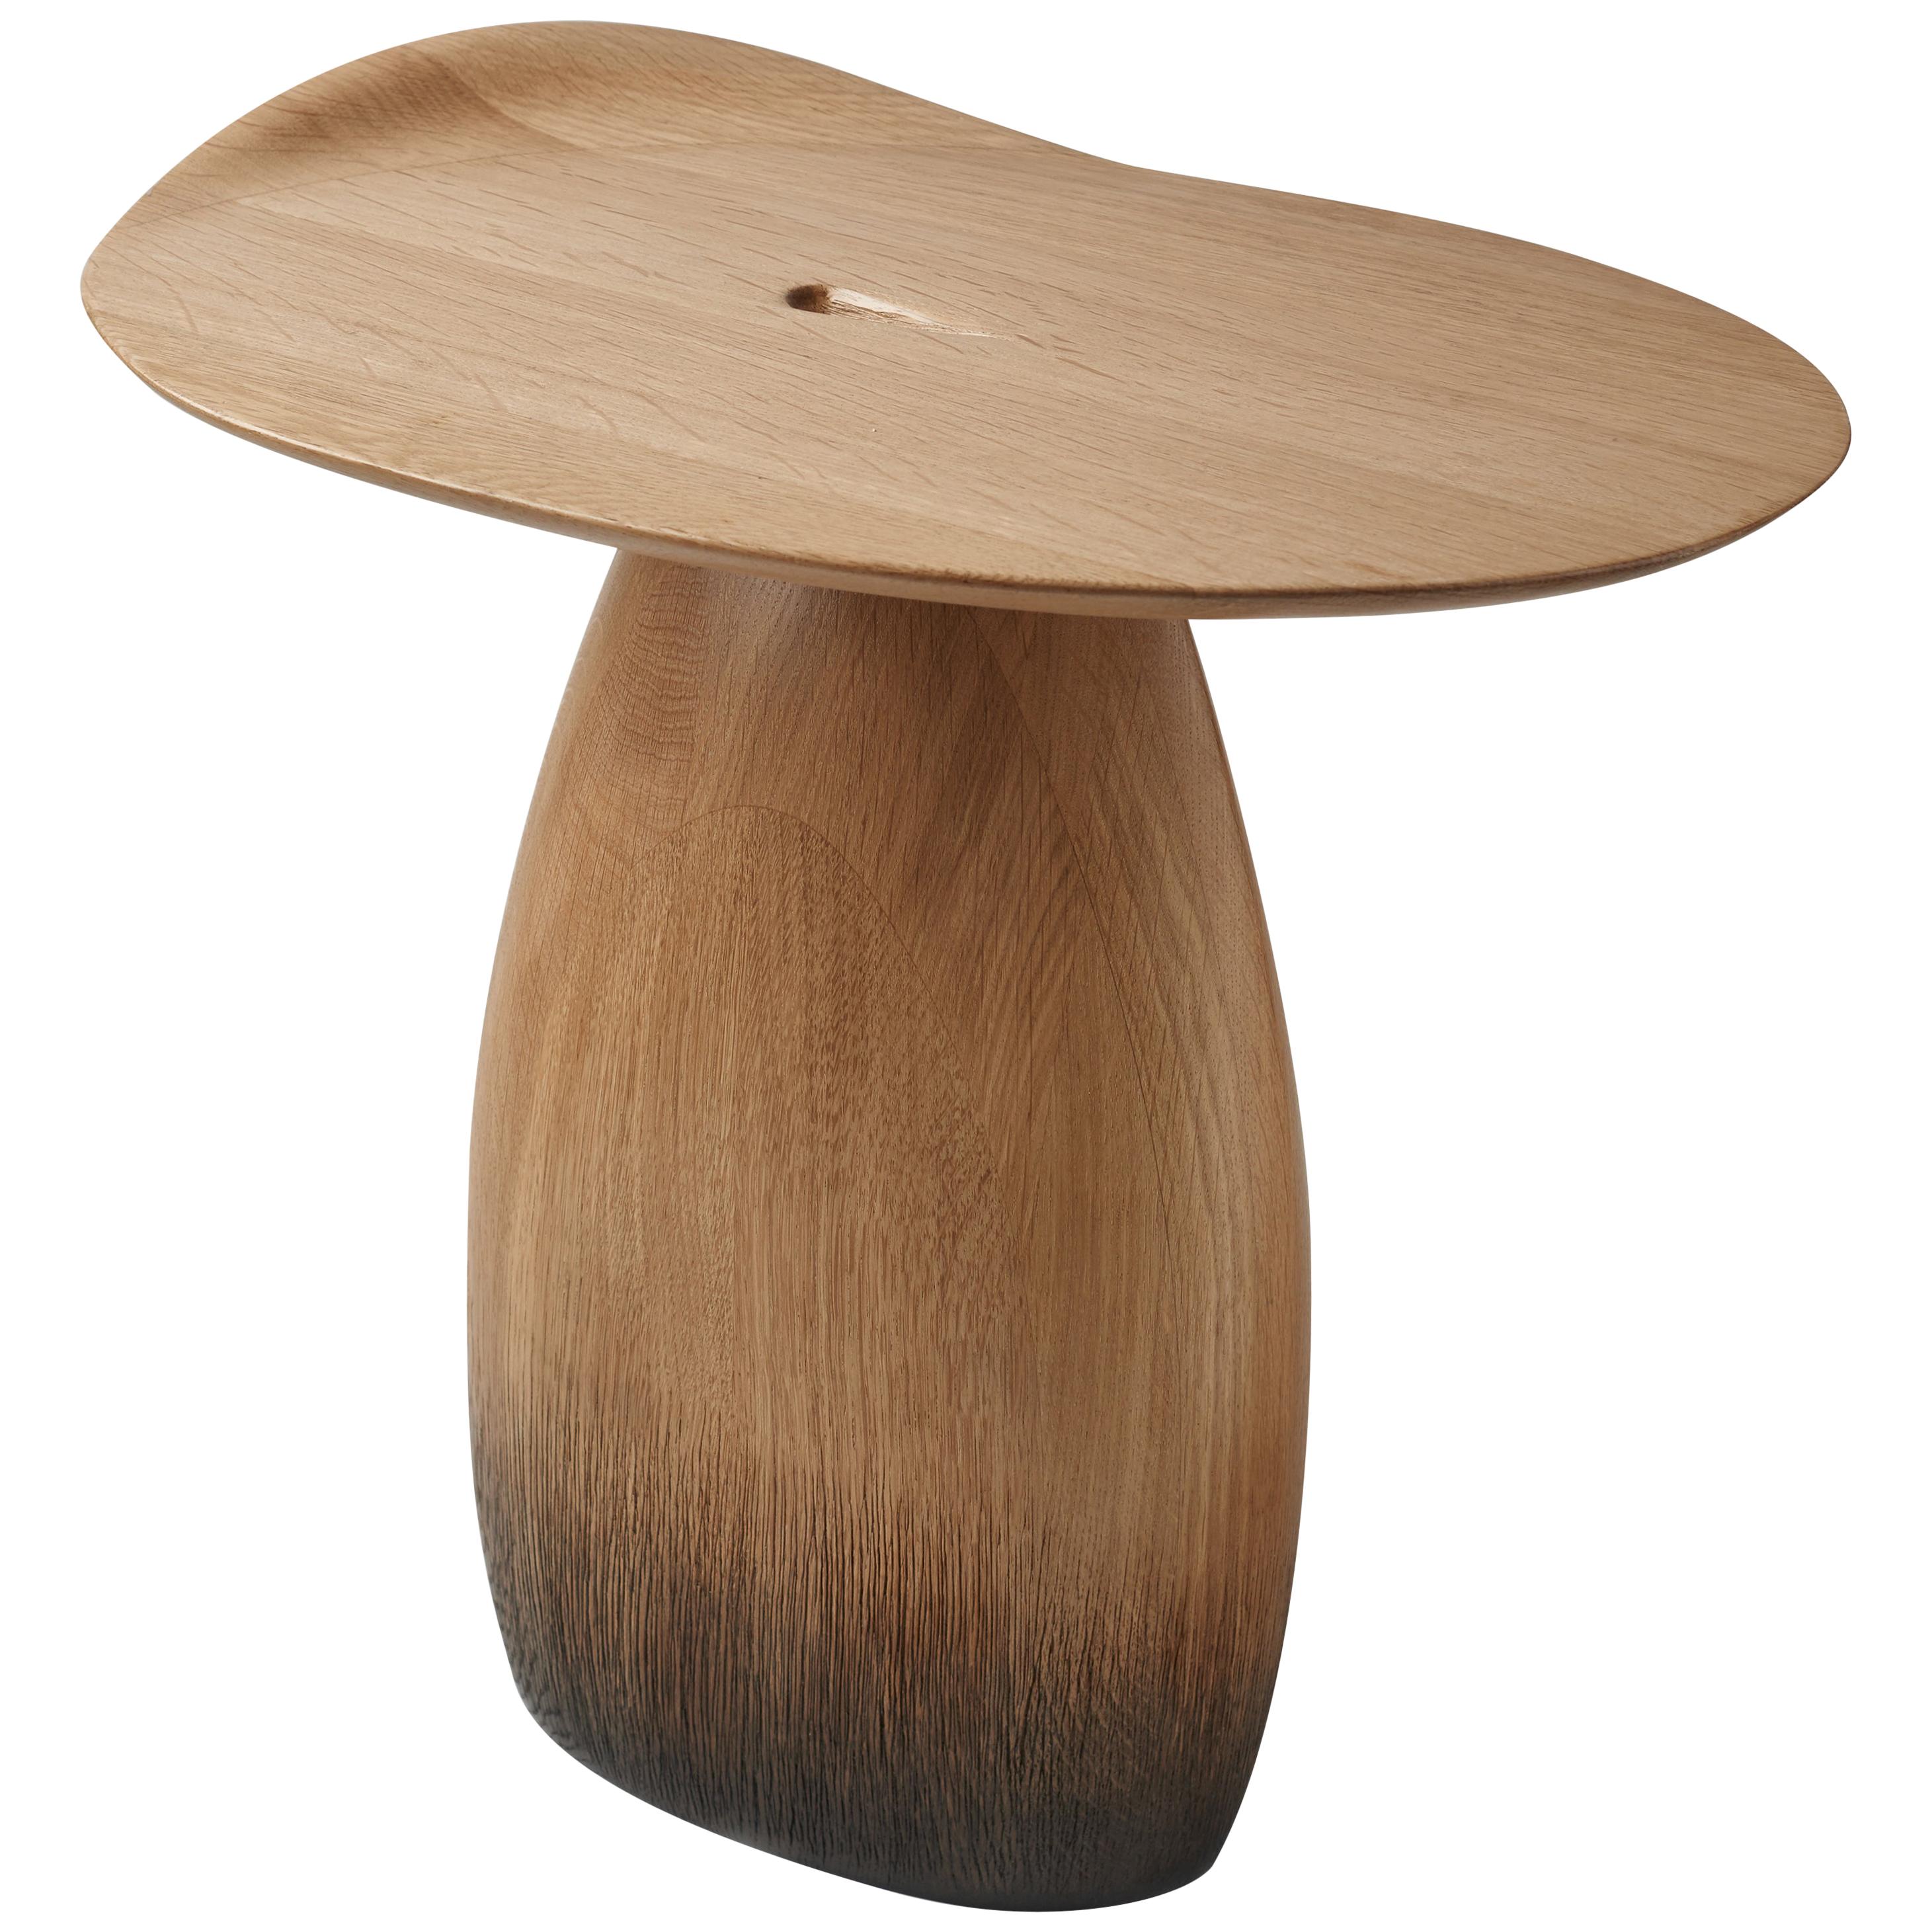 Oak Side Table, "Table Ellipse" by Designer Hoon Moreau